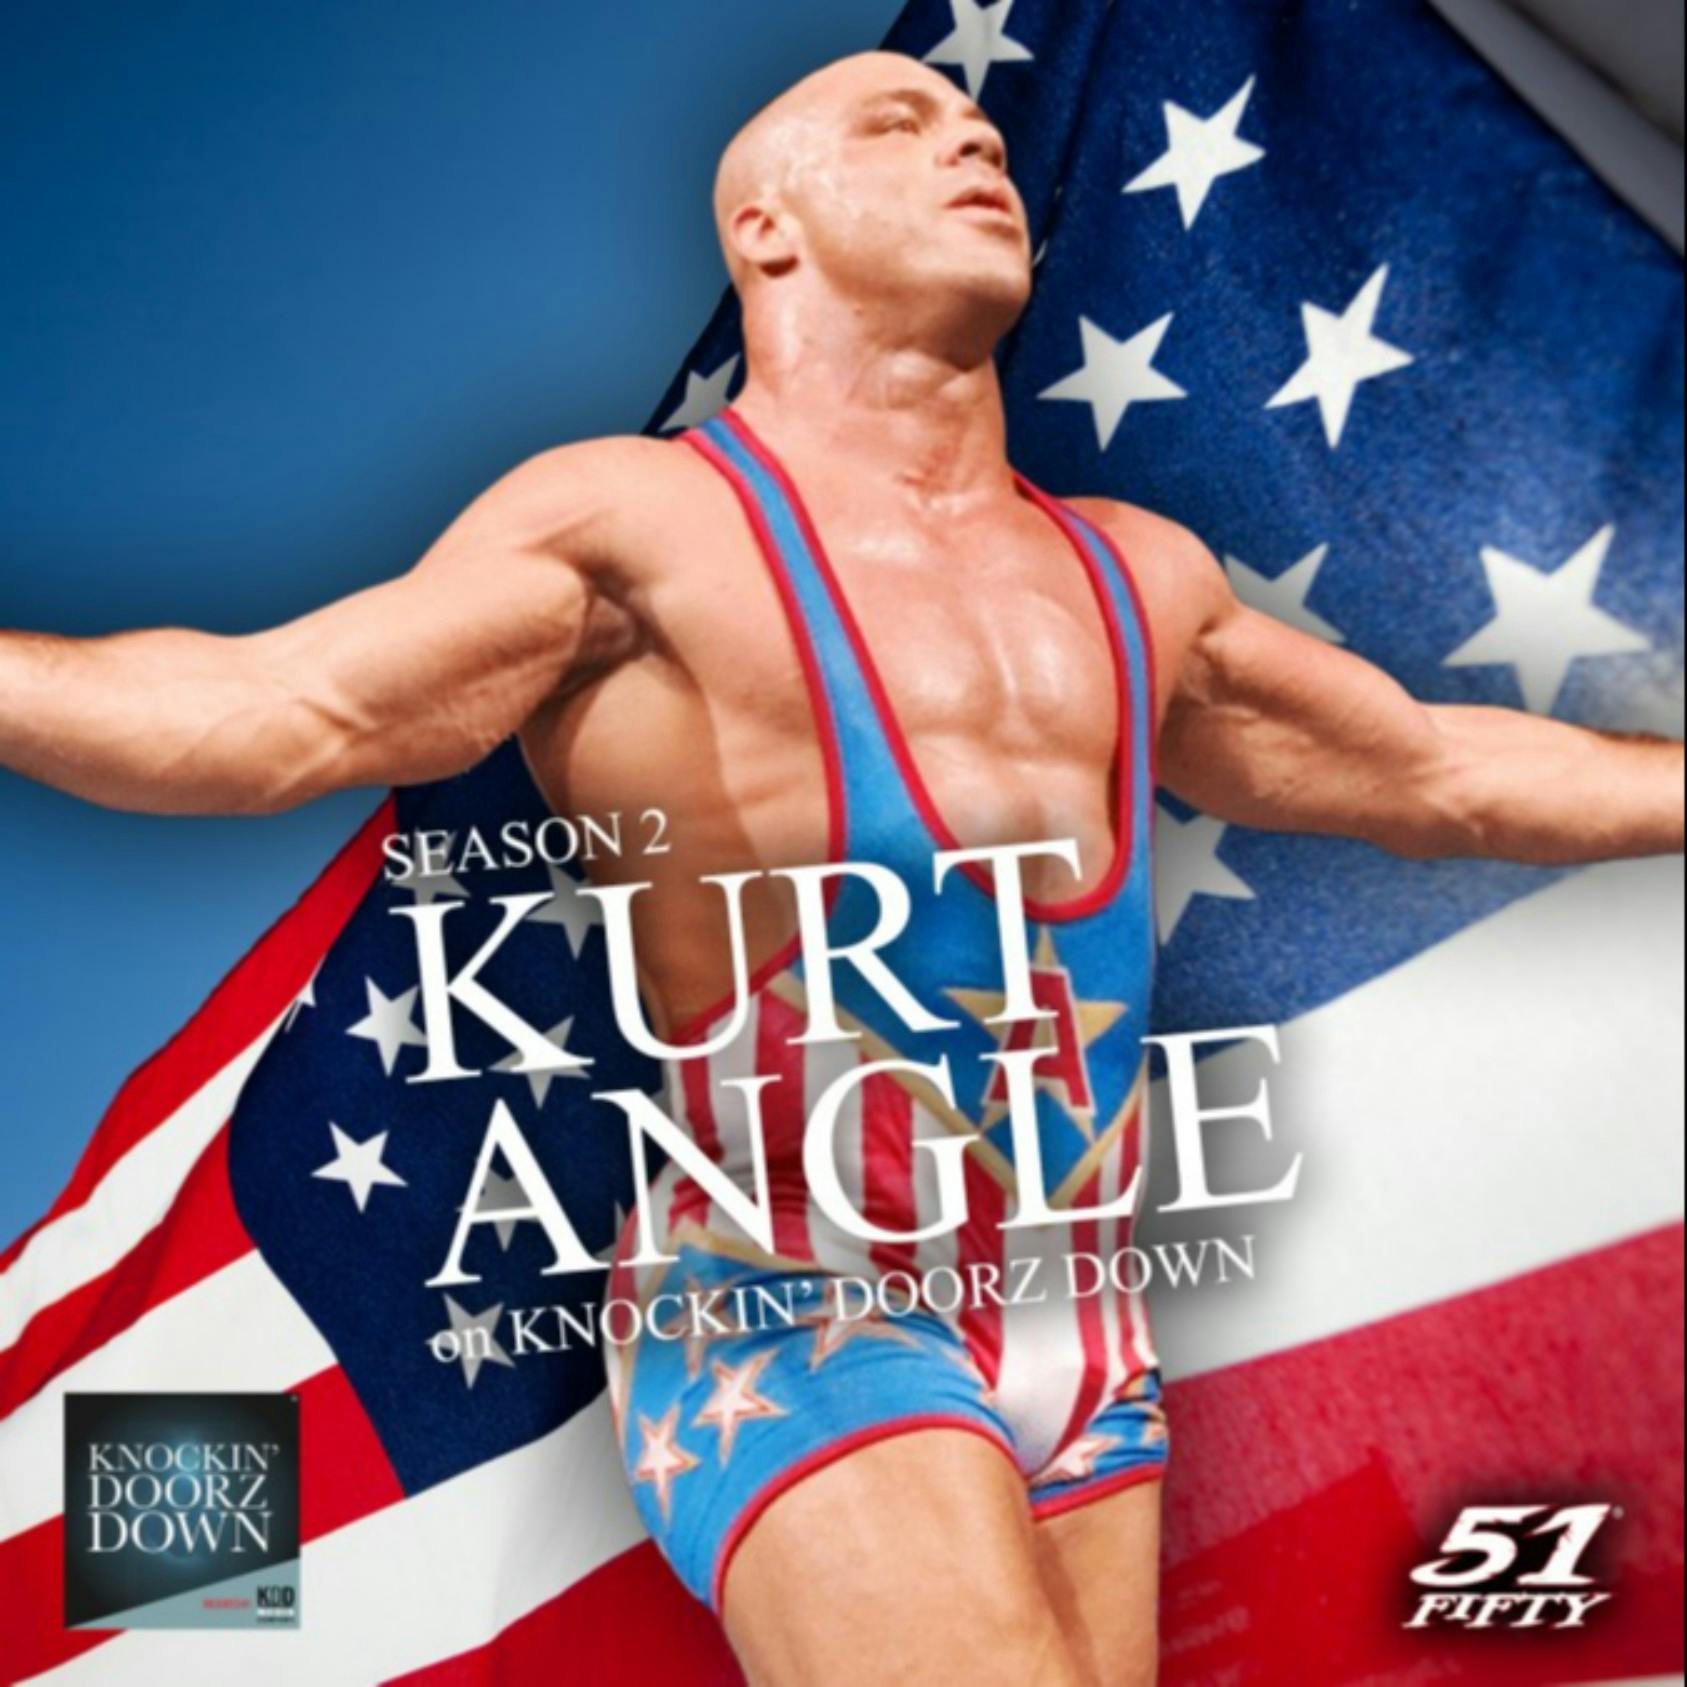 Kurt Angle | Sober, Overcoming Prescription Medication Addiction and Alcoholism. WWE Hall of Famer and Olympic Gold Medalist